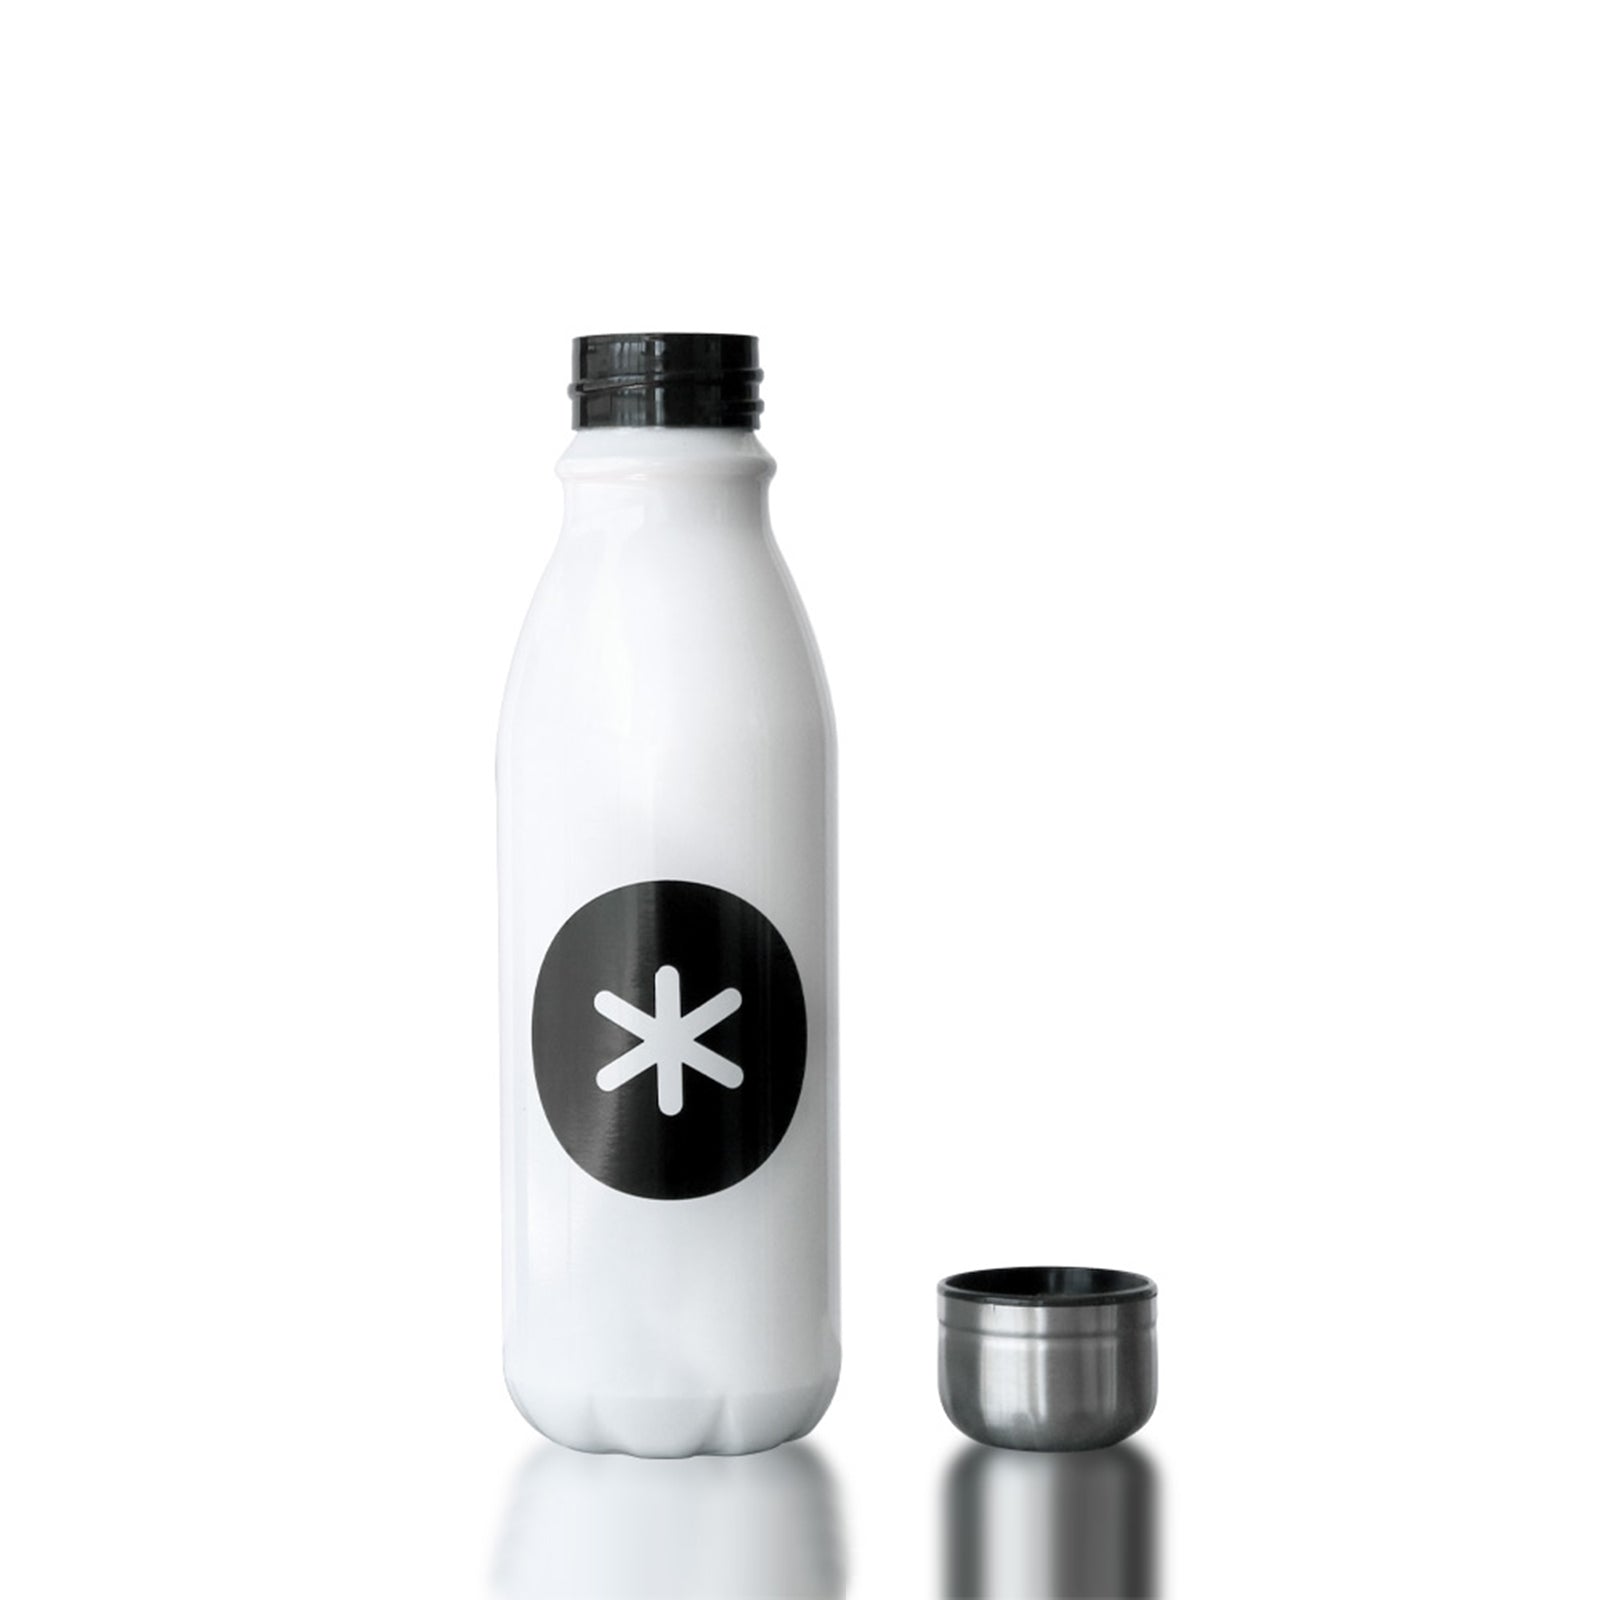 ANTARTIK - Botella de Agua Reutilizable de 550 ml en Aluminio, Blanco